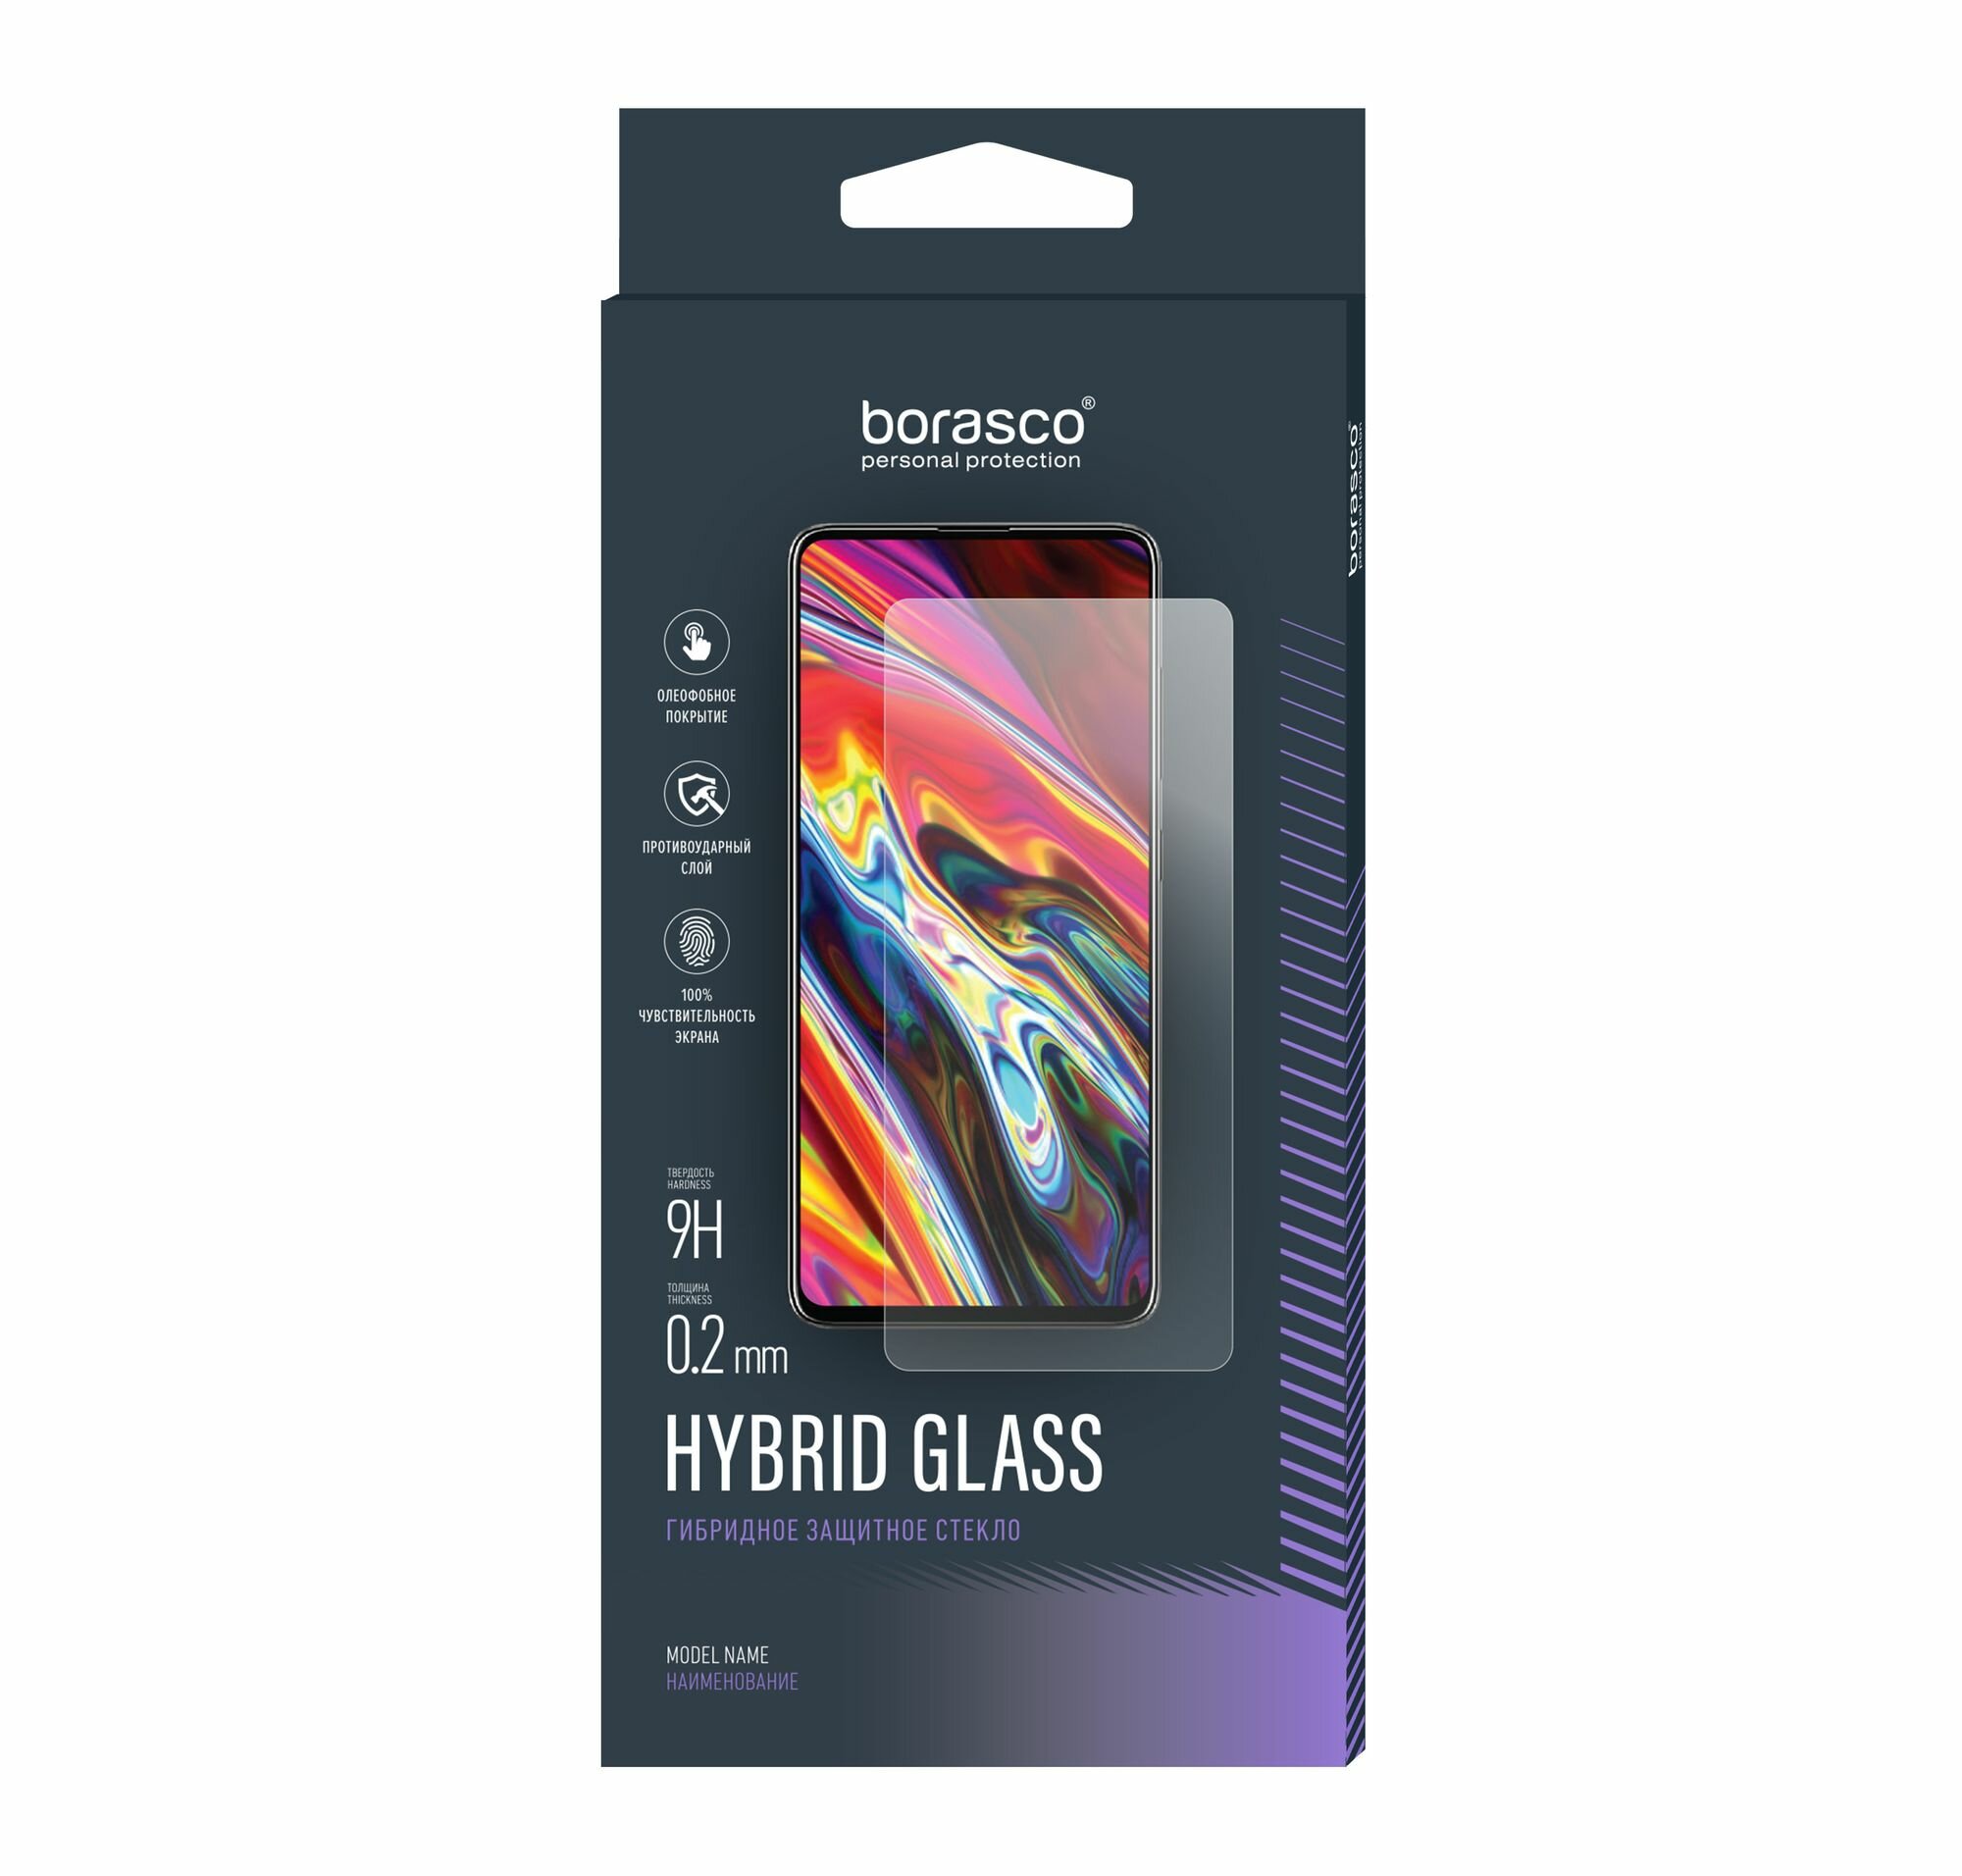 Стекло защитное Hybrid Glass VSP 0,26 мм для iPhone 7 Plus/8 Plus BoraSco - фото №1